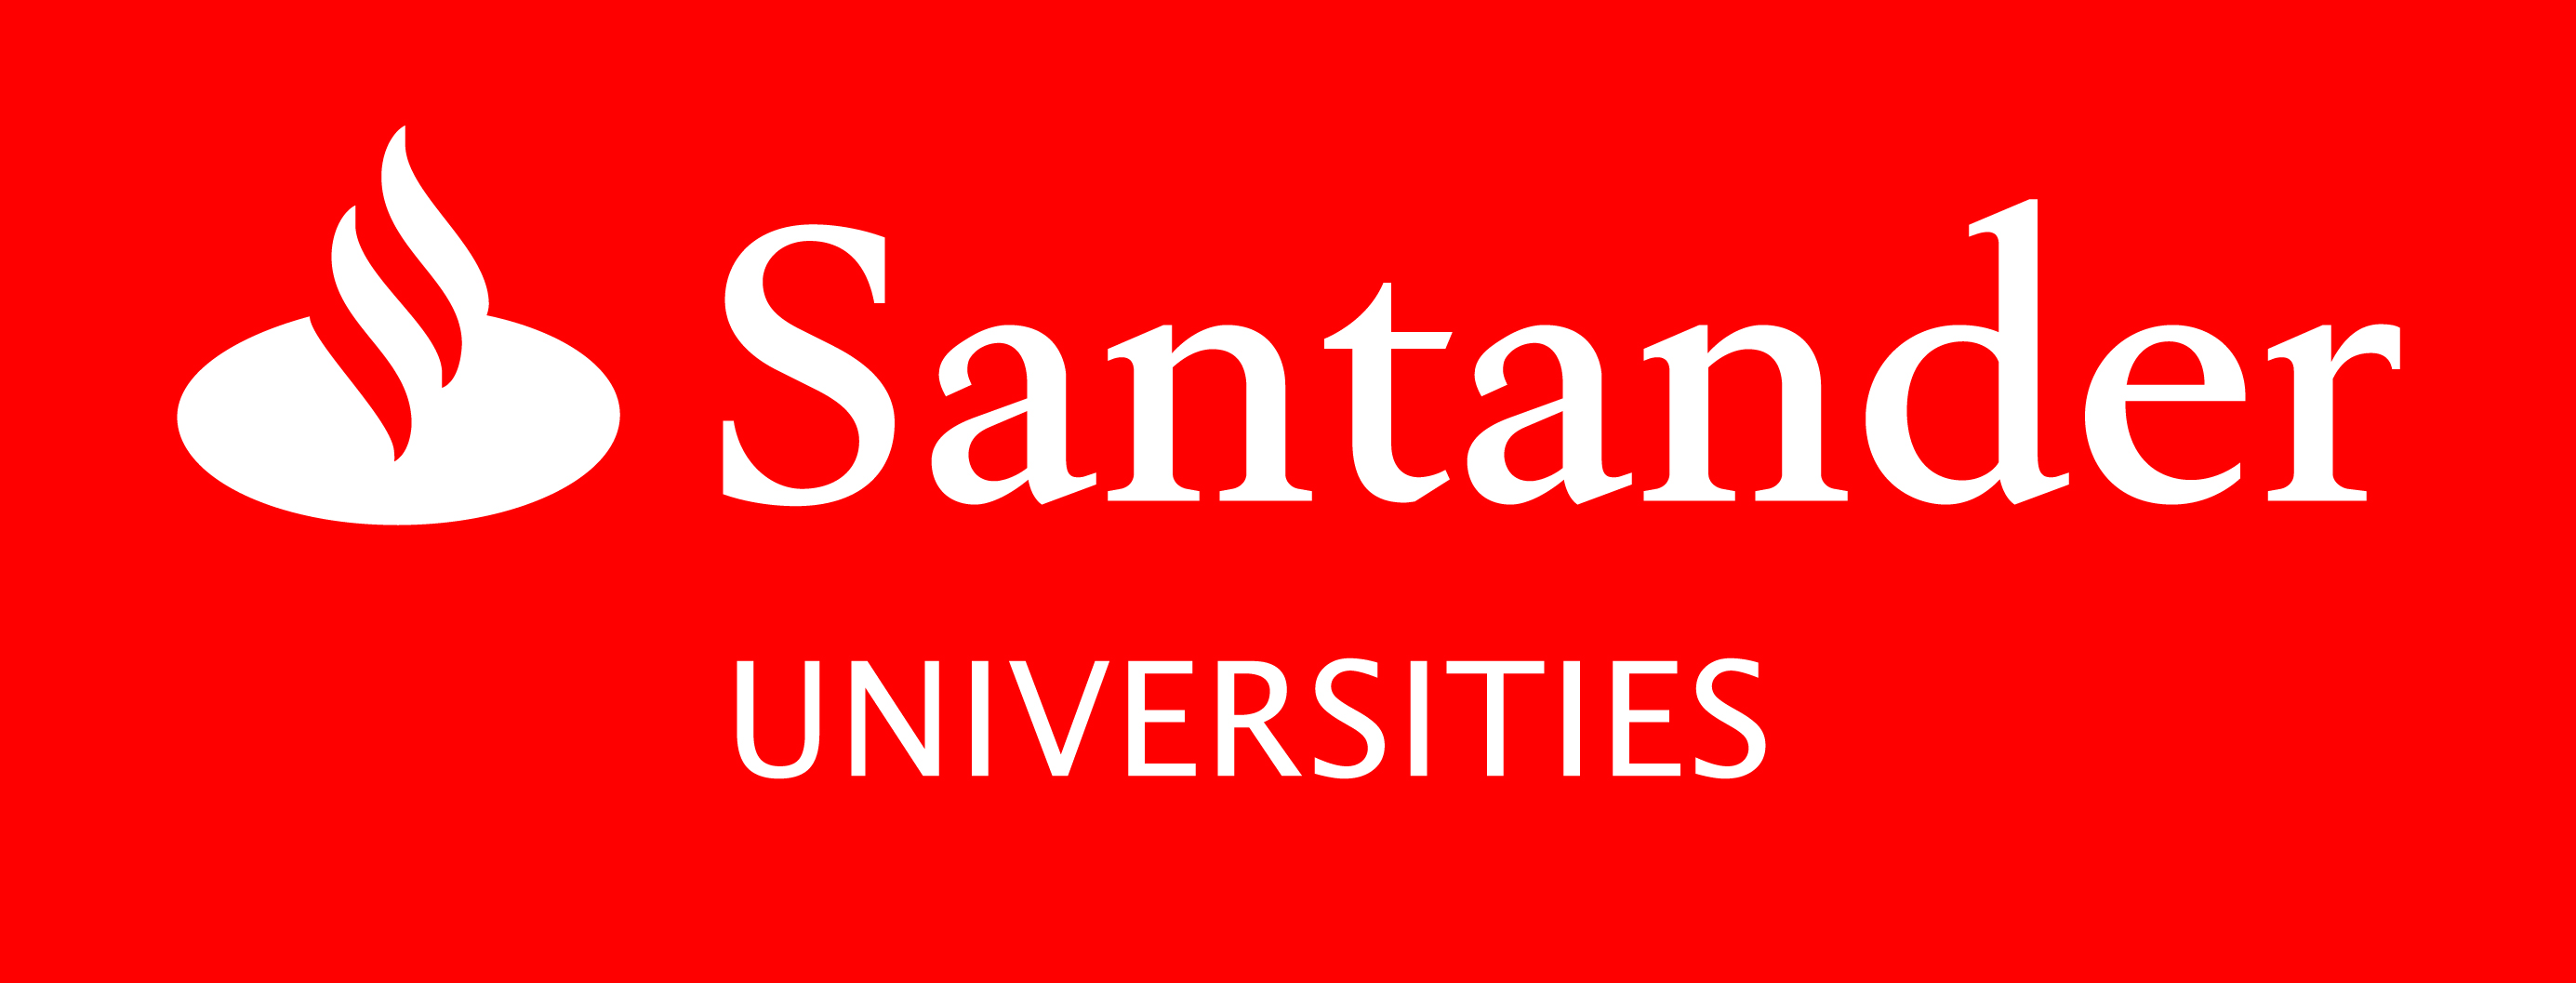 santander-universities